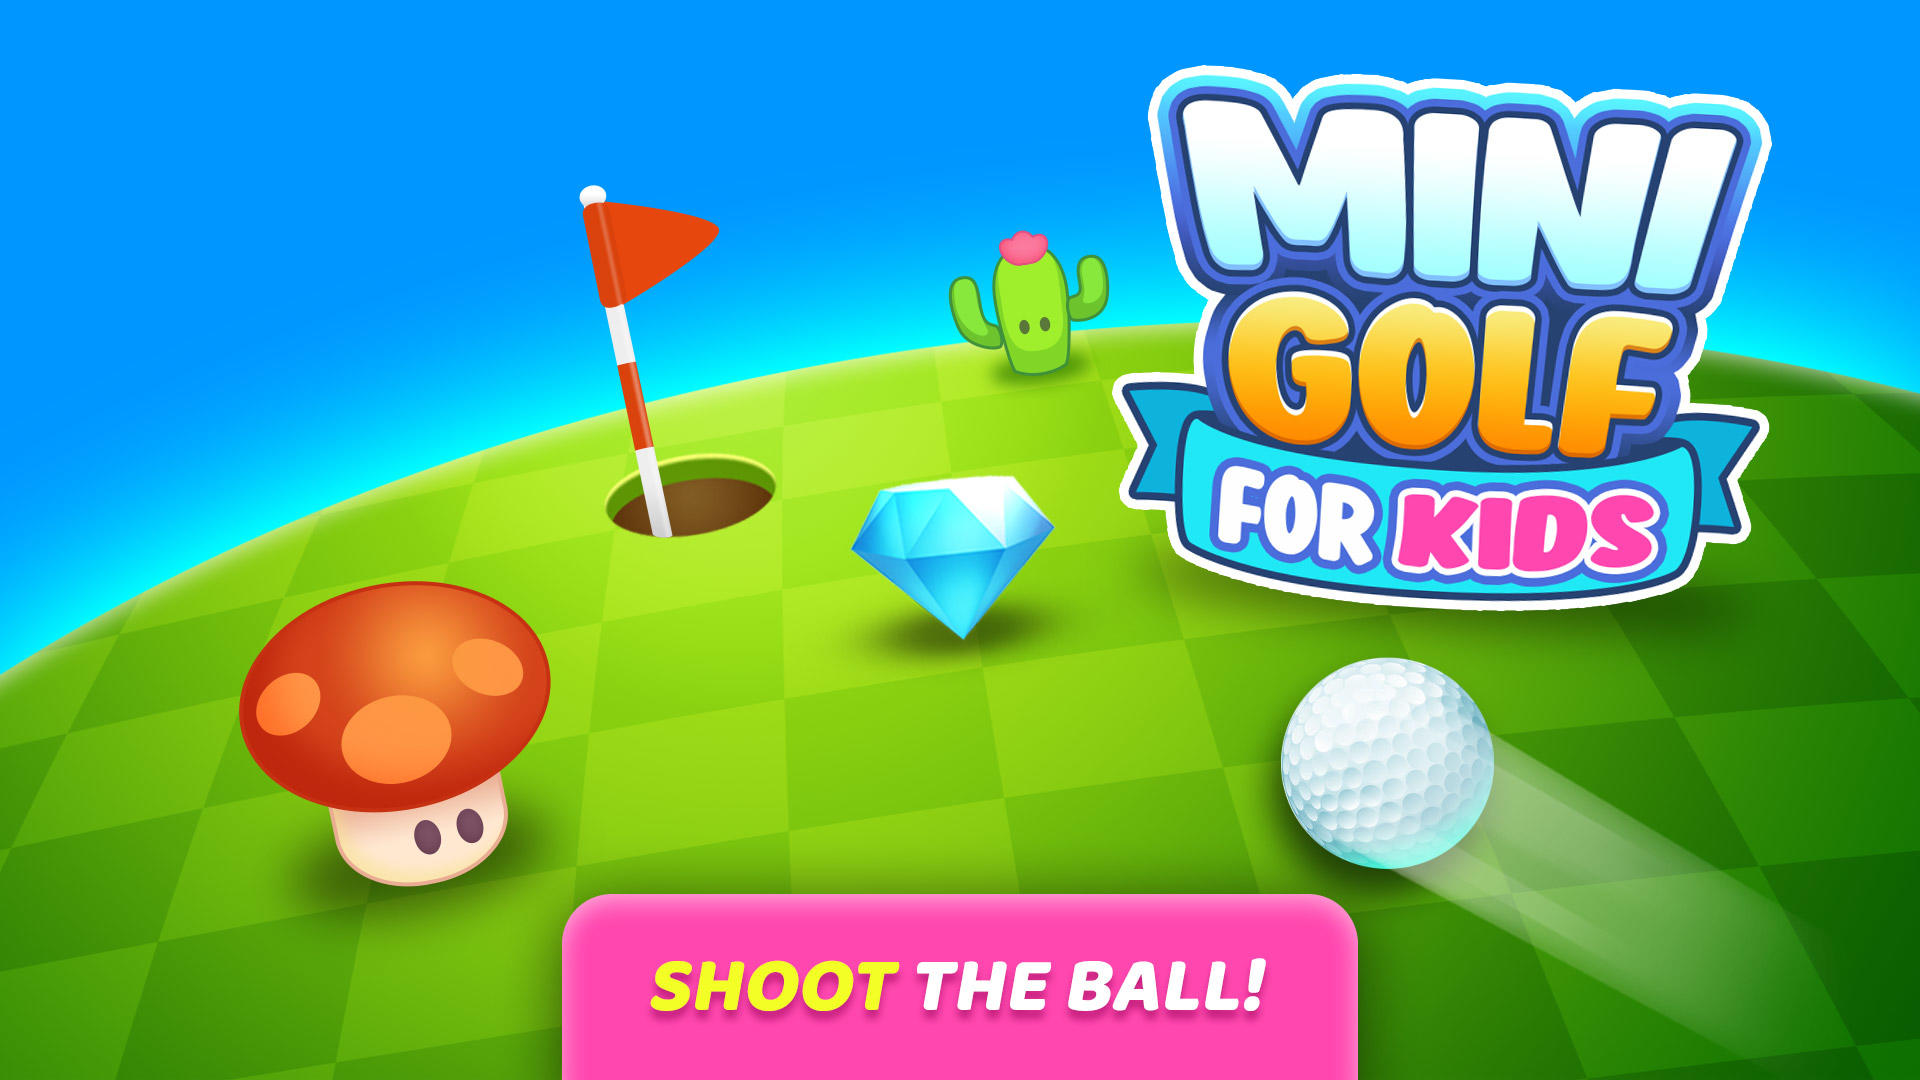 Screenshot 1 of Permainan Golf Mini untuk Anak-Anak 1.301